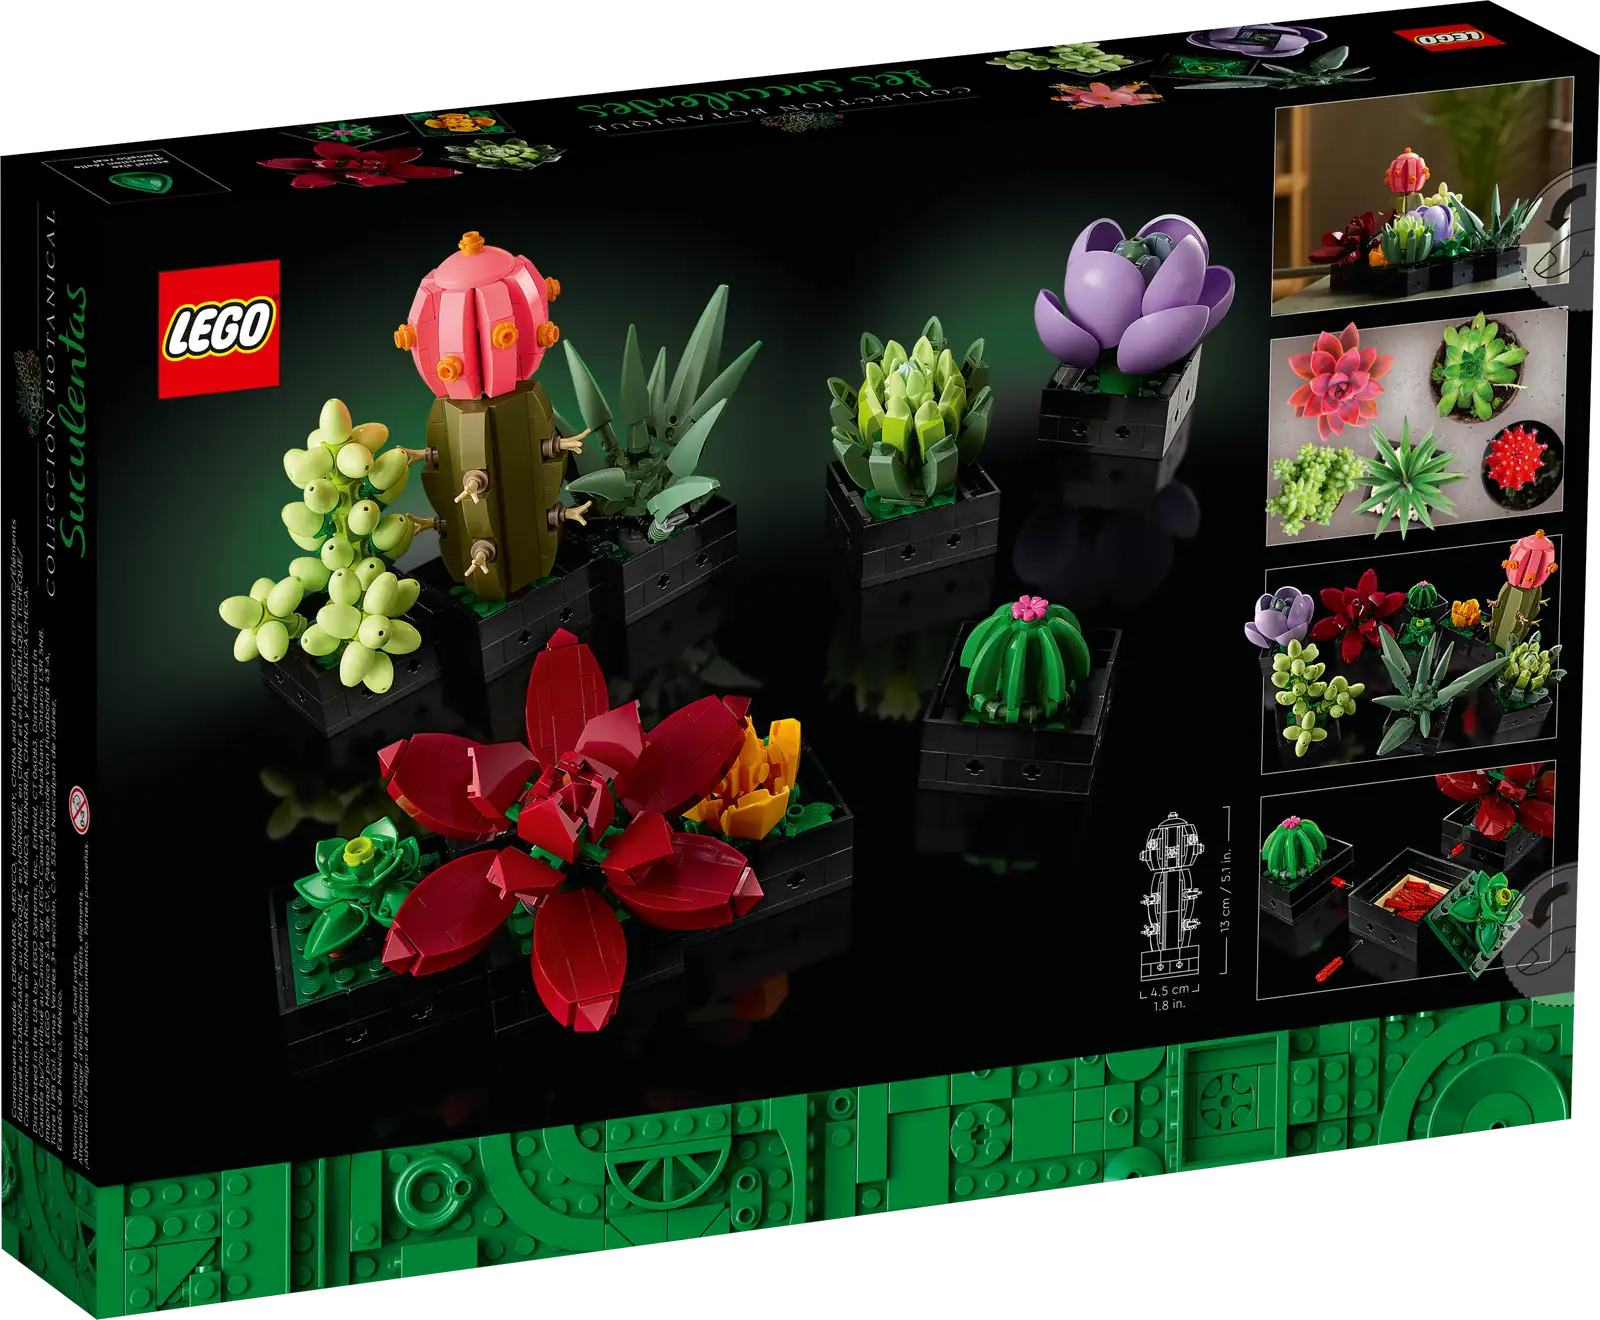 LEGO Succulents Botanical Collection